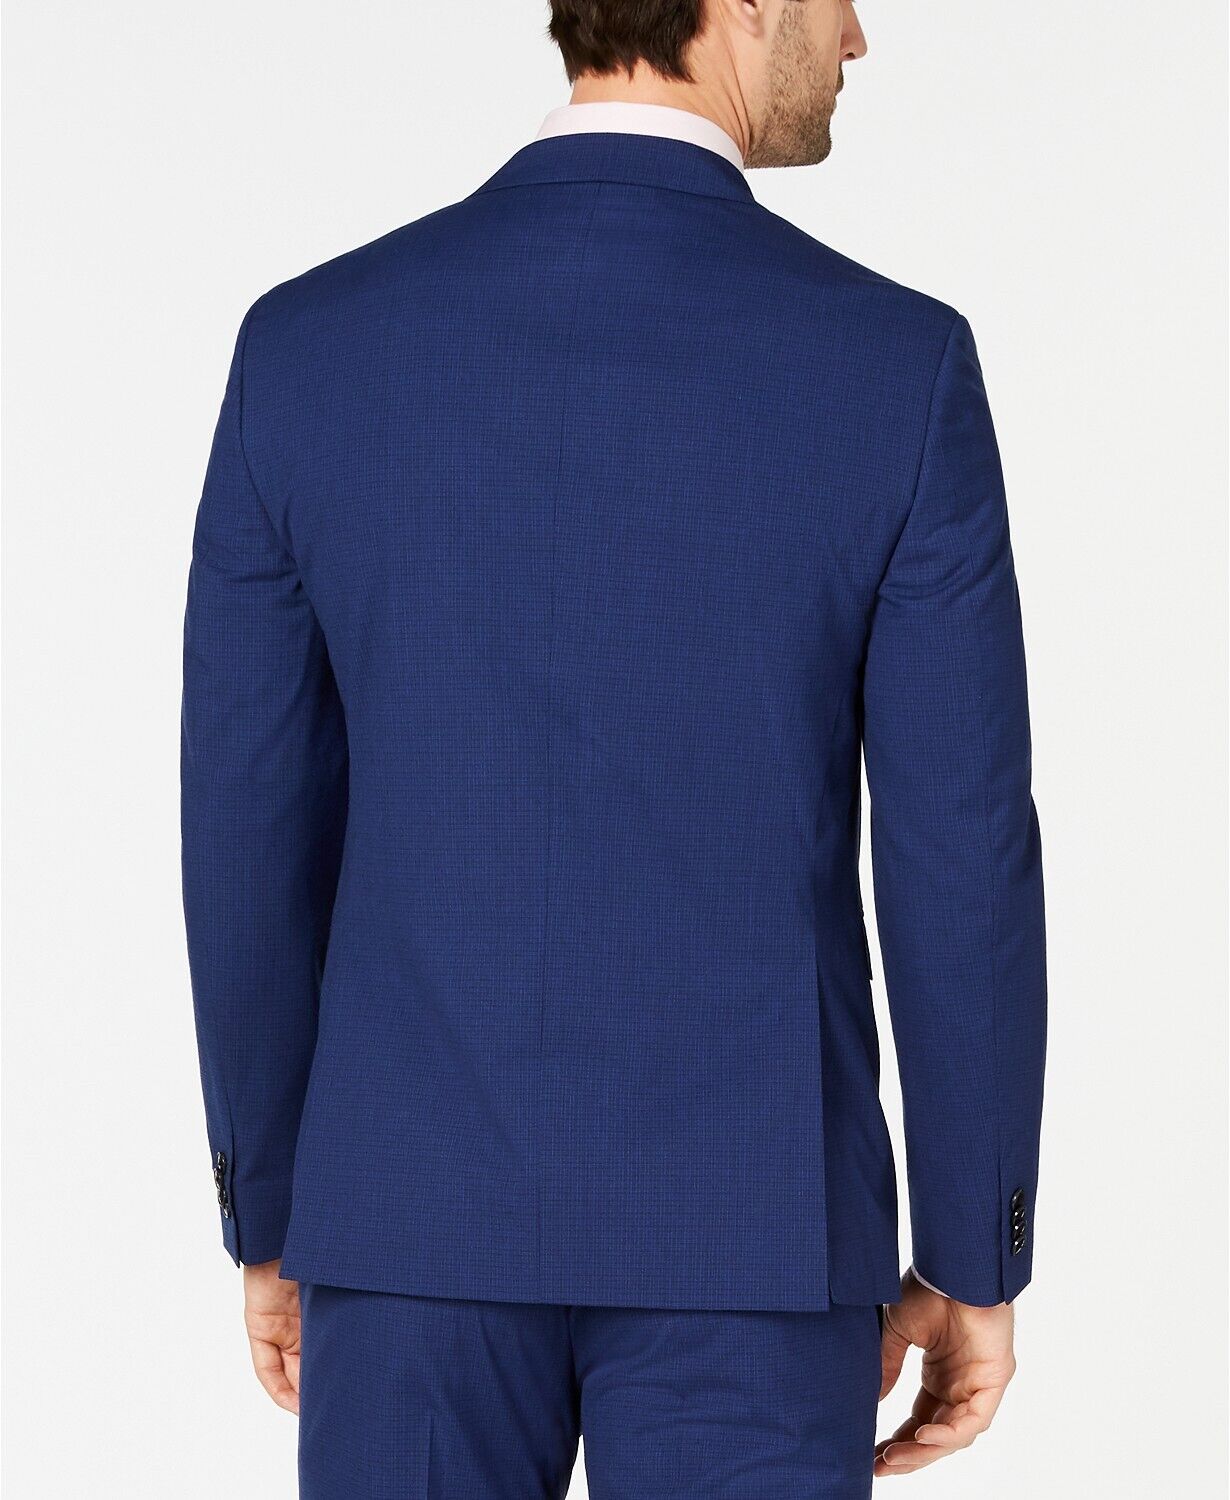 Vince Camuto Slim-Fit Stretch Wrinkle-Resistant Blue Check Suit Jacket 44S